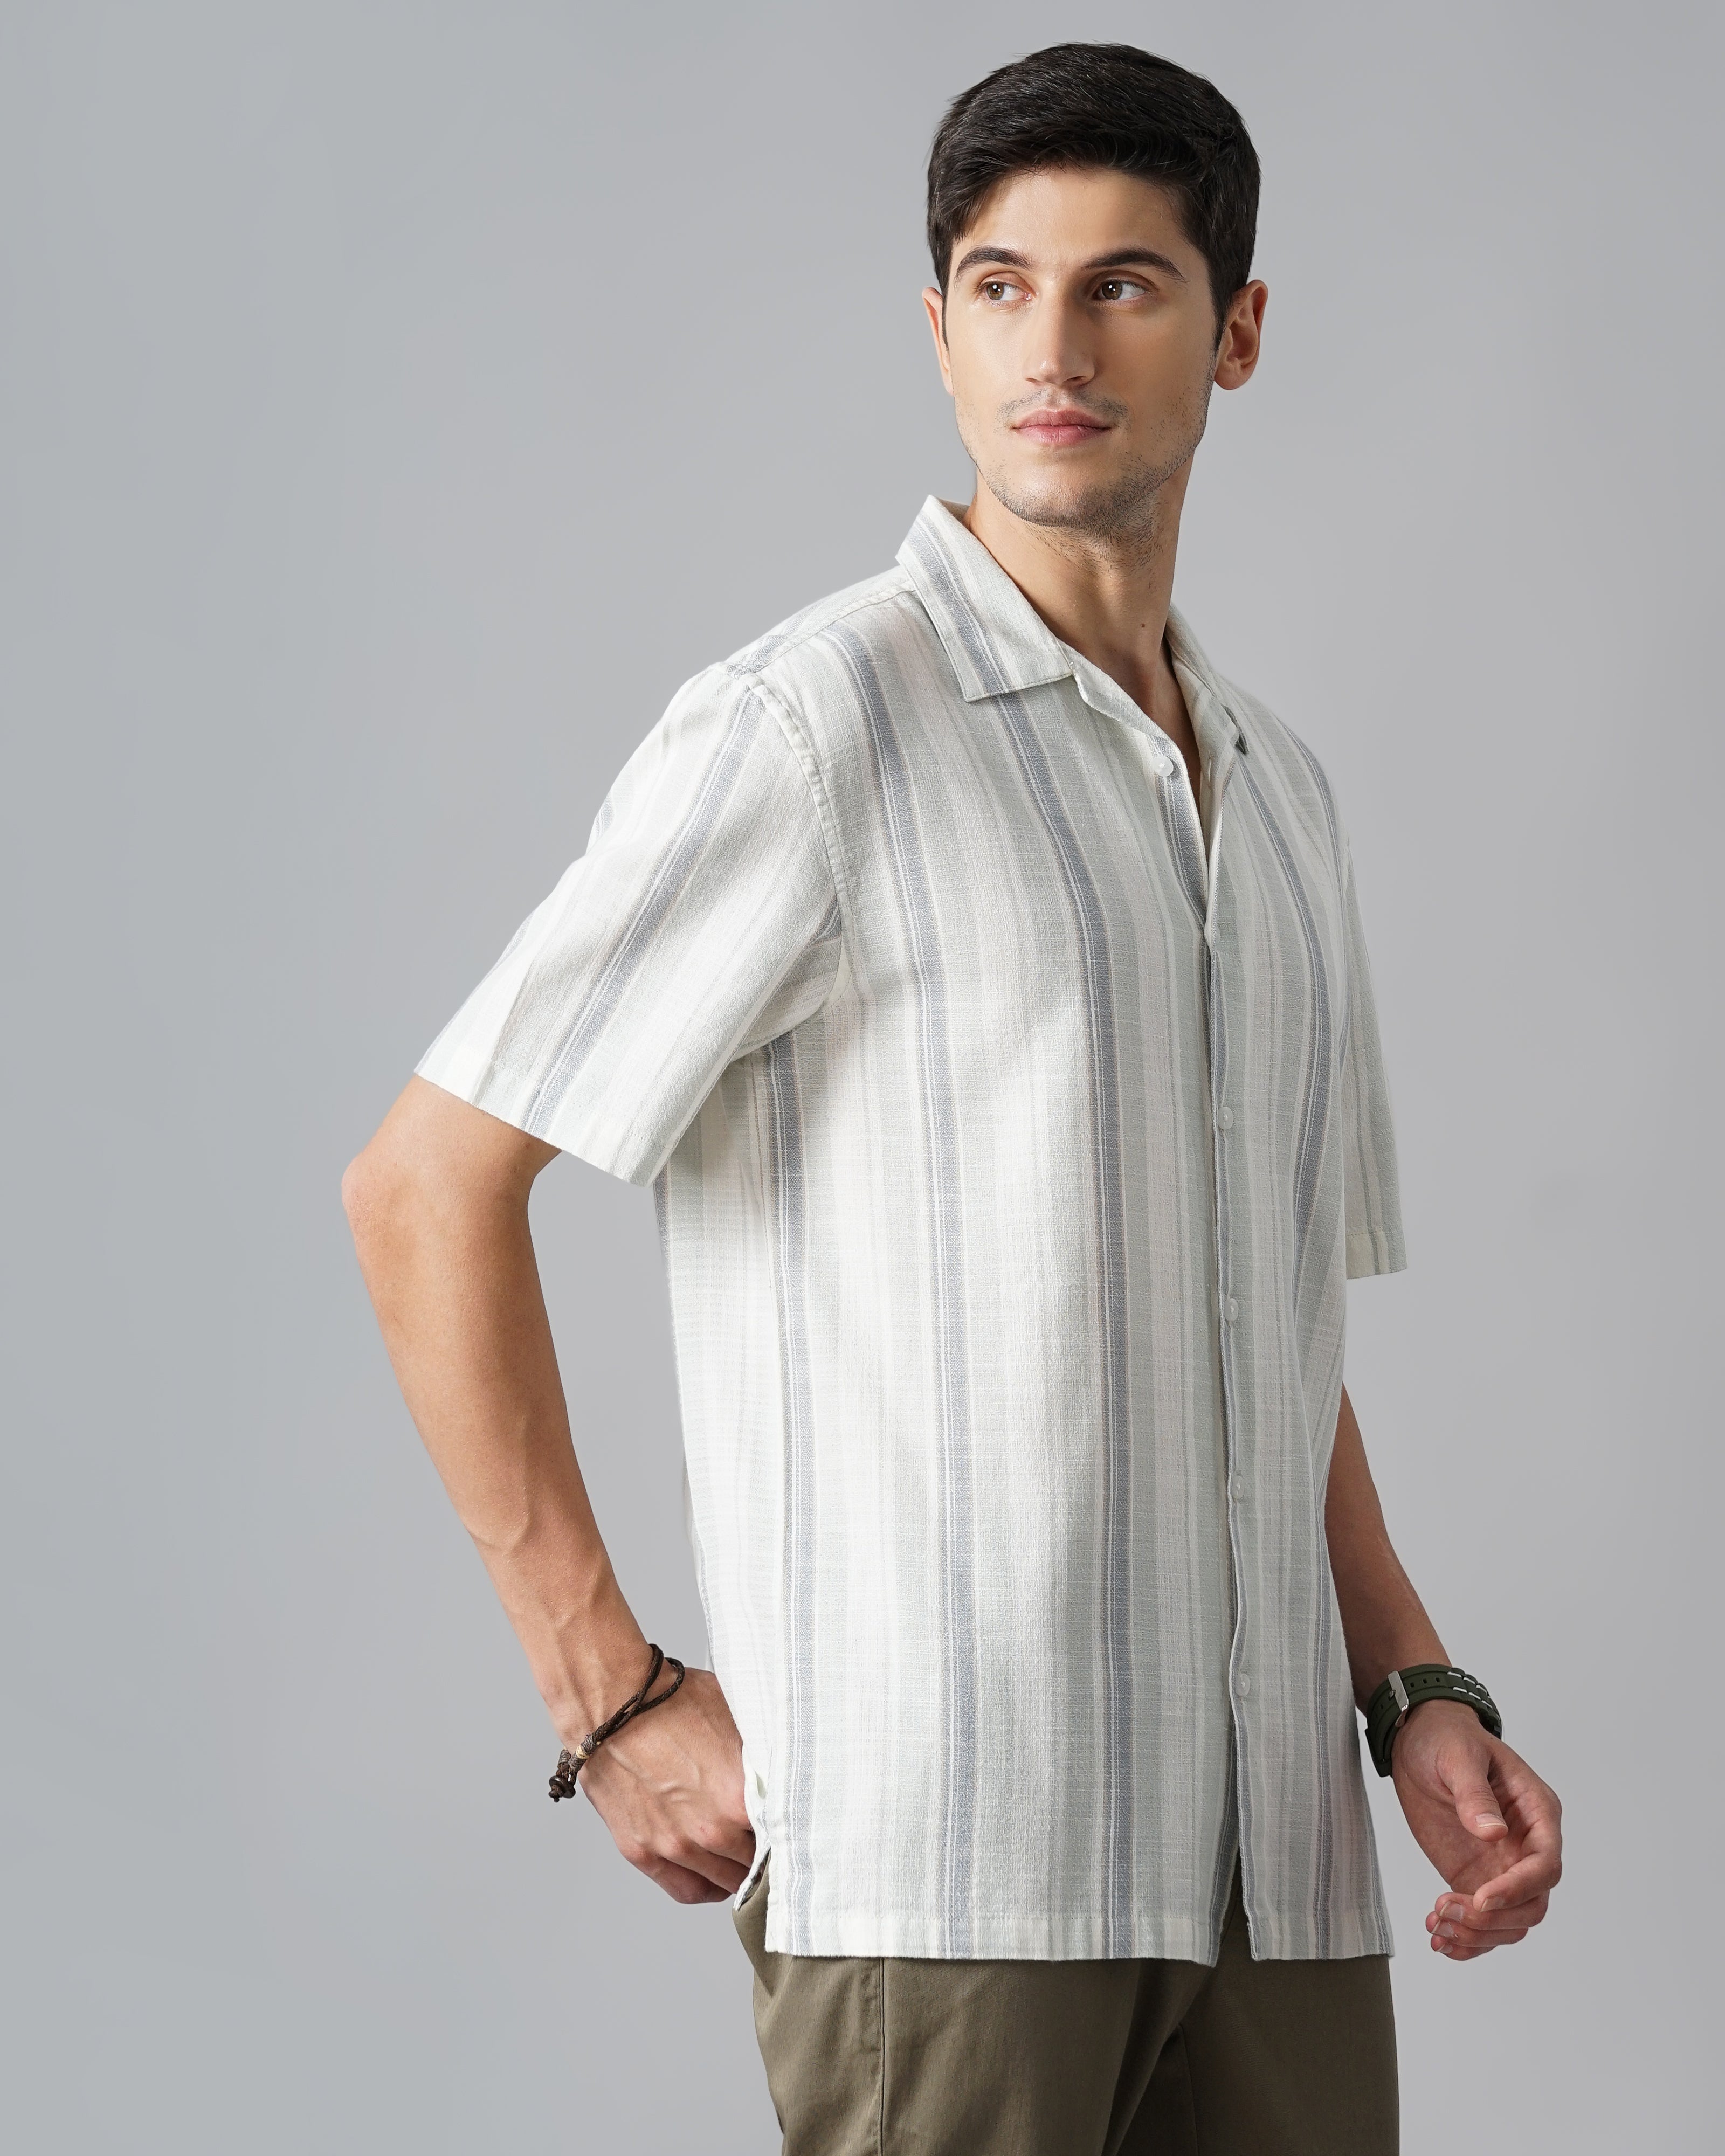 Men's StripeS Shirt